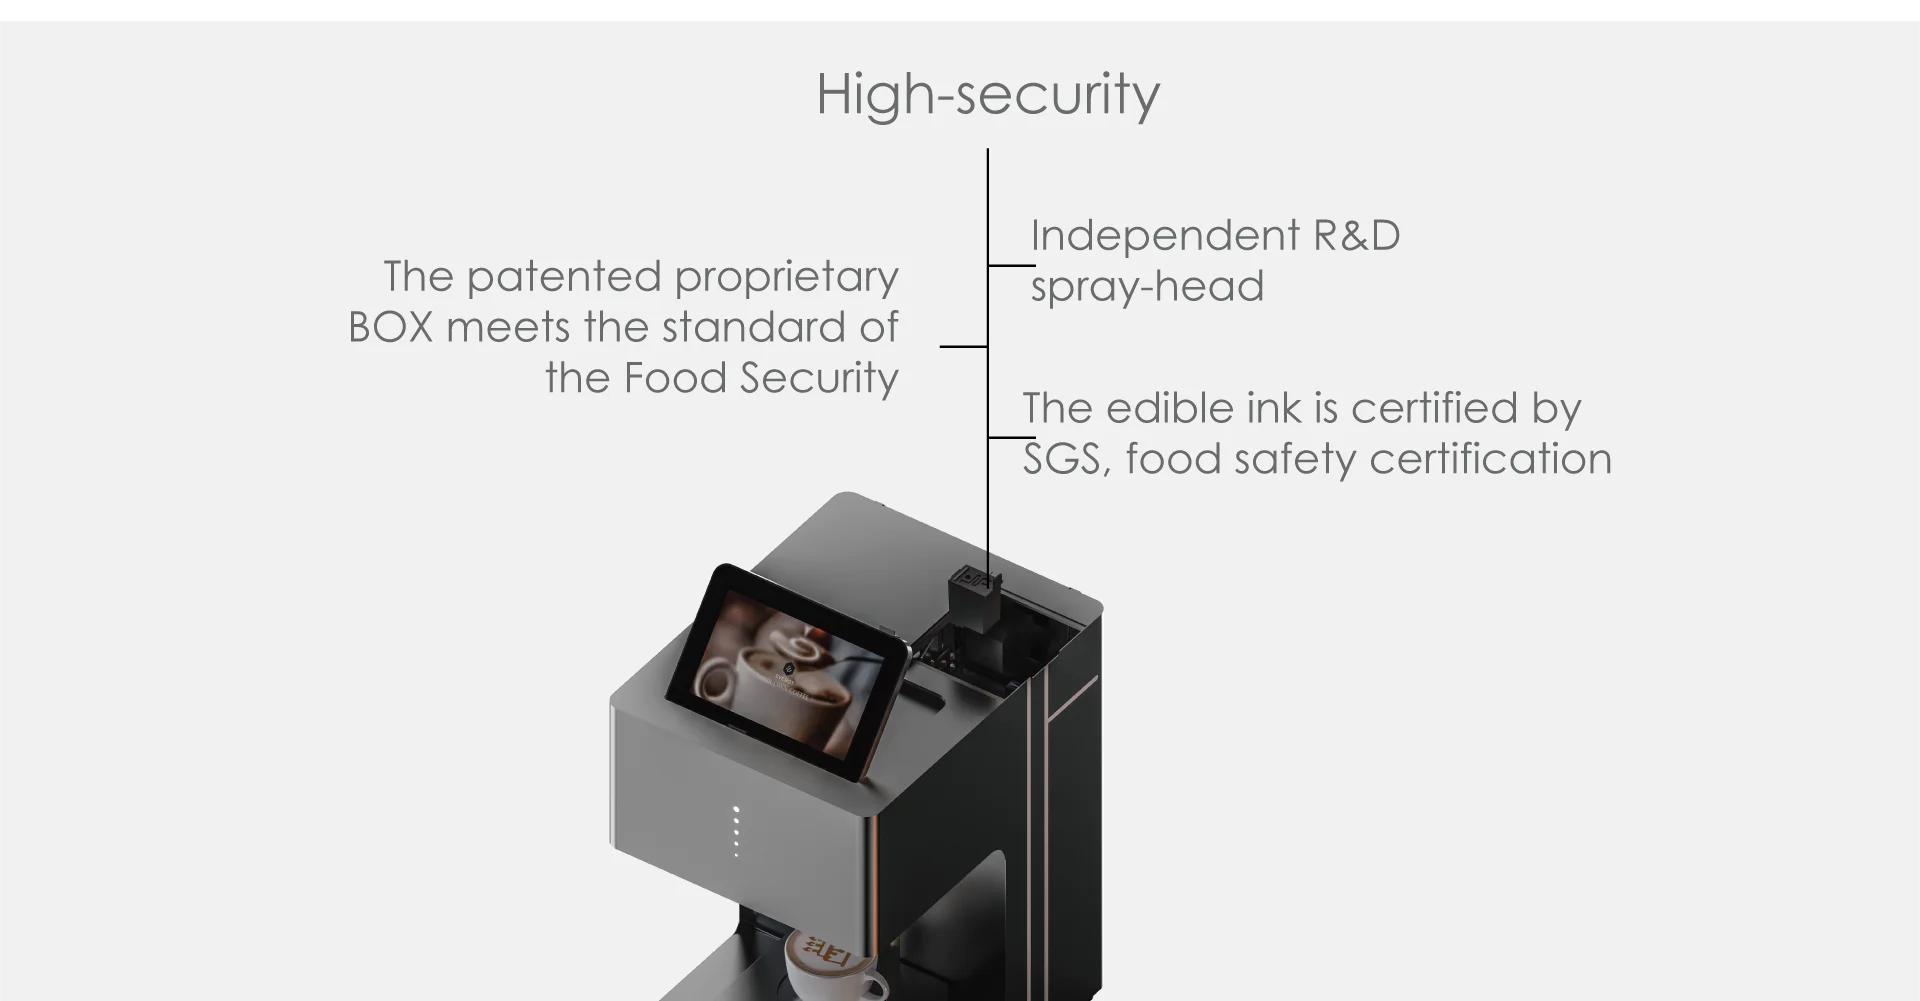 3d coffee printer for printing selfie photos on coffee or foods